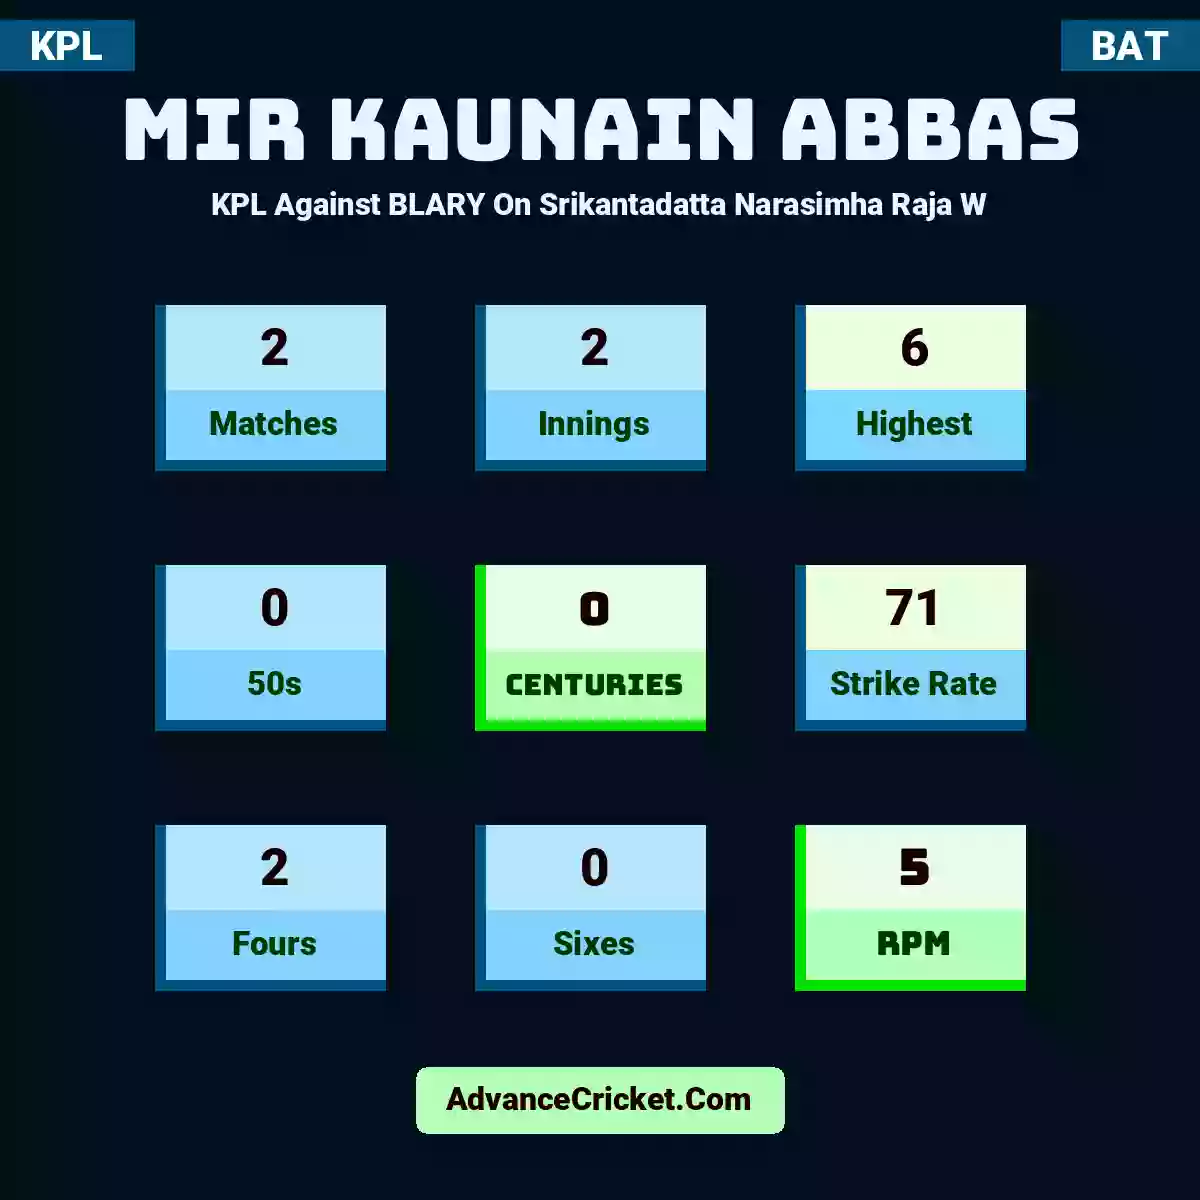 Mir Kaunain Abbas KPL  Against BLARY On Srikantadatta Narasimha Raja W, Mir Kaunain Abbas played 2 matches, scored 6 runs as highest, 0 half-centuries, and 0 centuries, with a strike rate of 71. M.Abbas hit 2 fours and 0 sixes, with an RPM of 5.